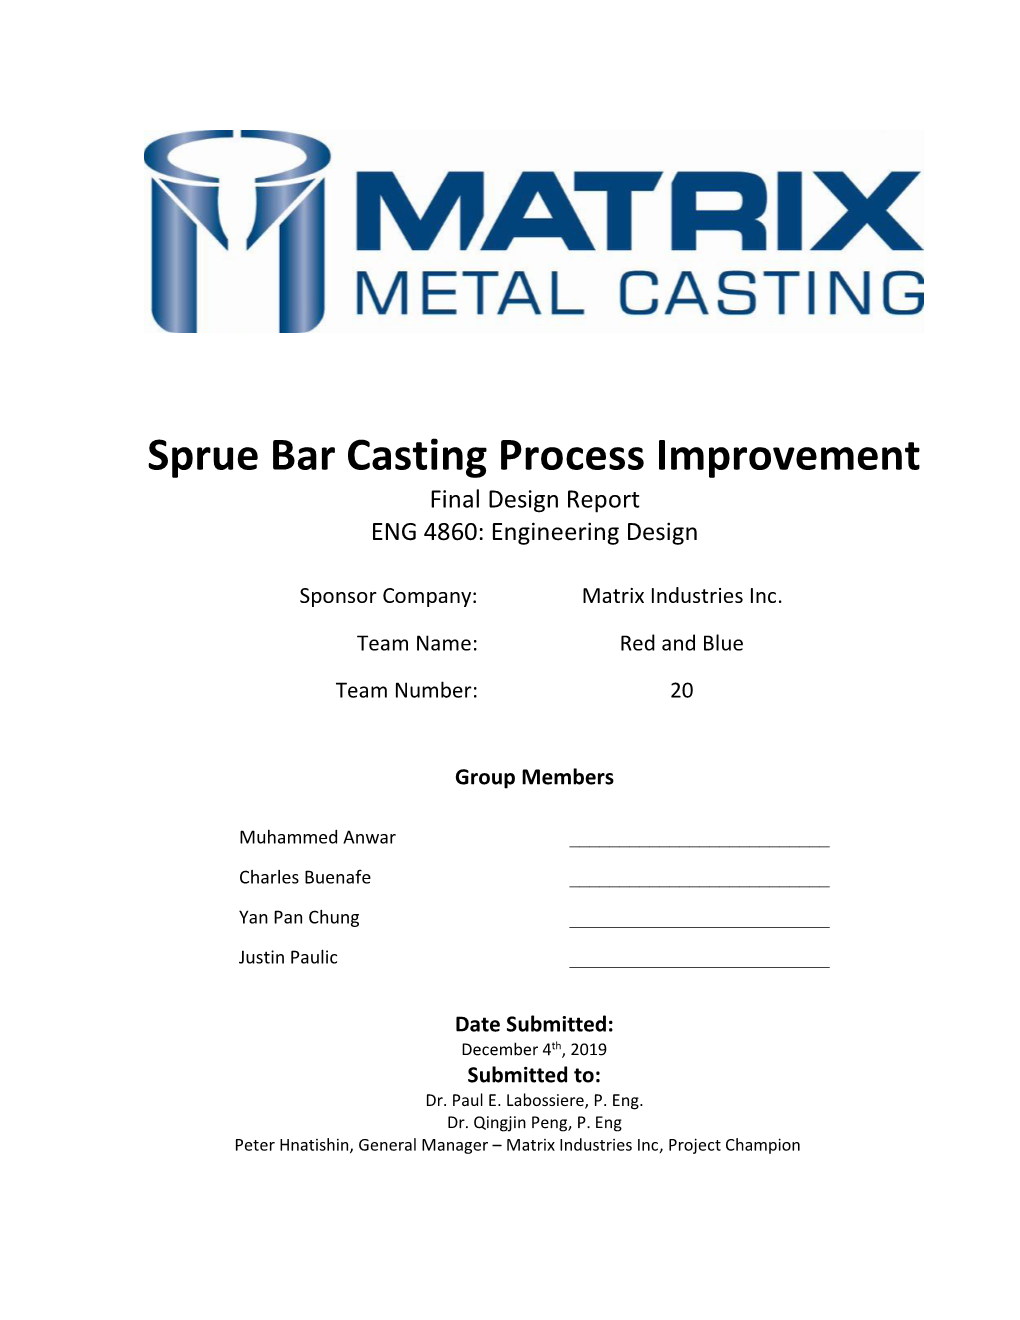 Sprue Bar Casting Process Improvement Final Design Report ENG 4860: Engineering Design